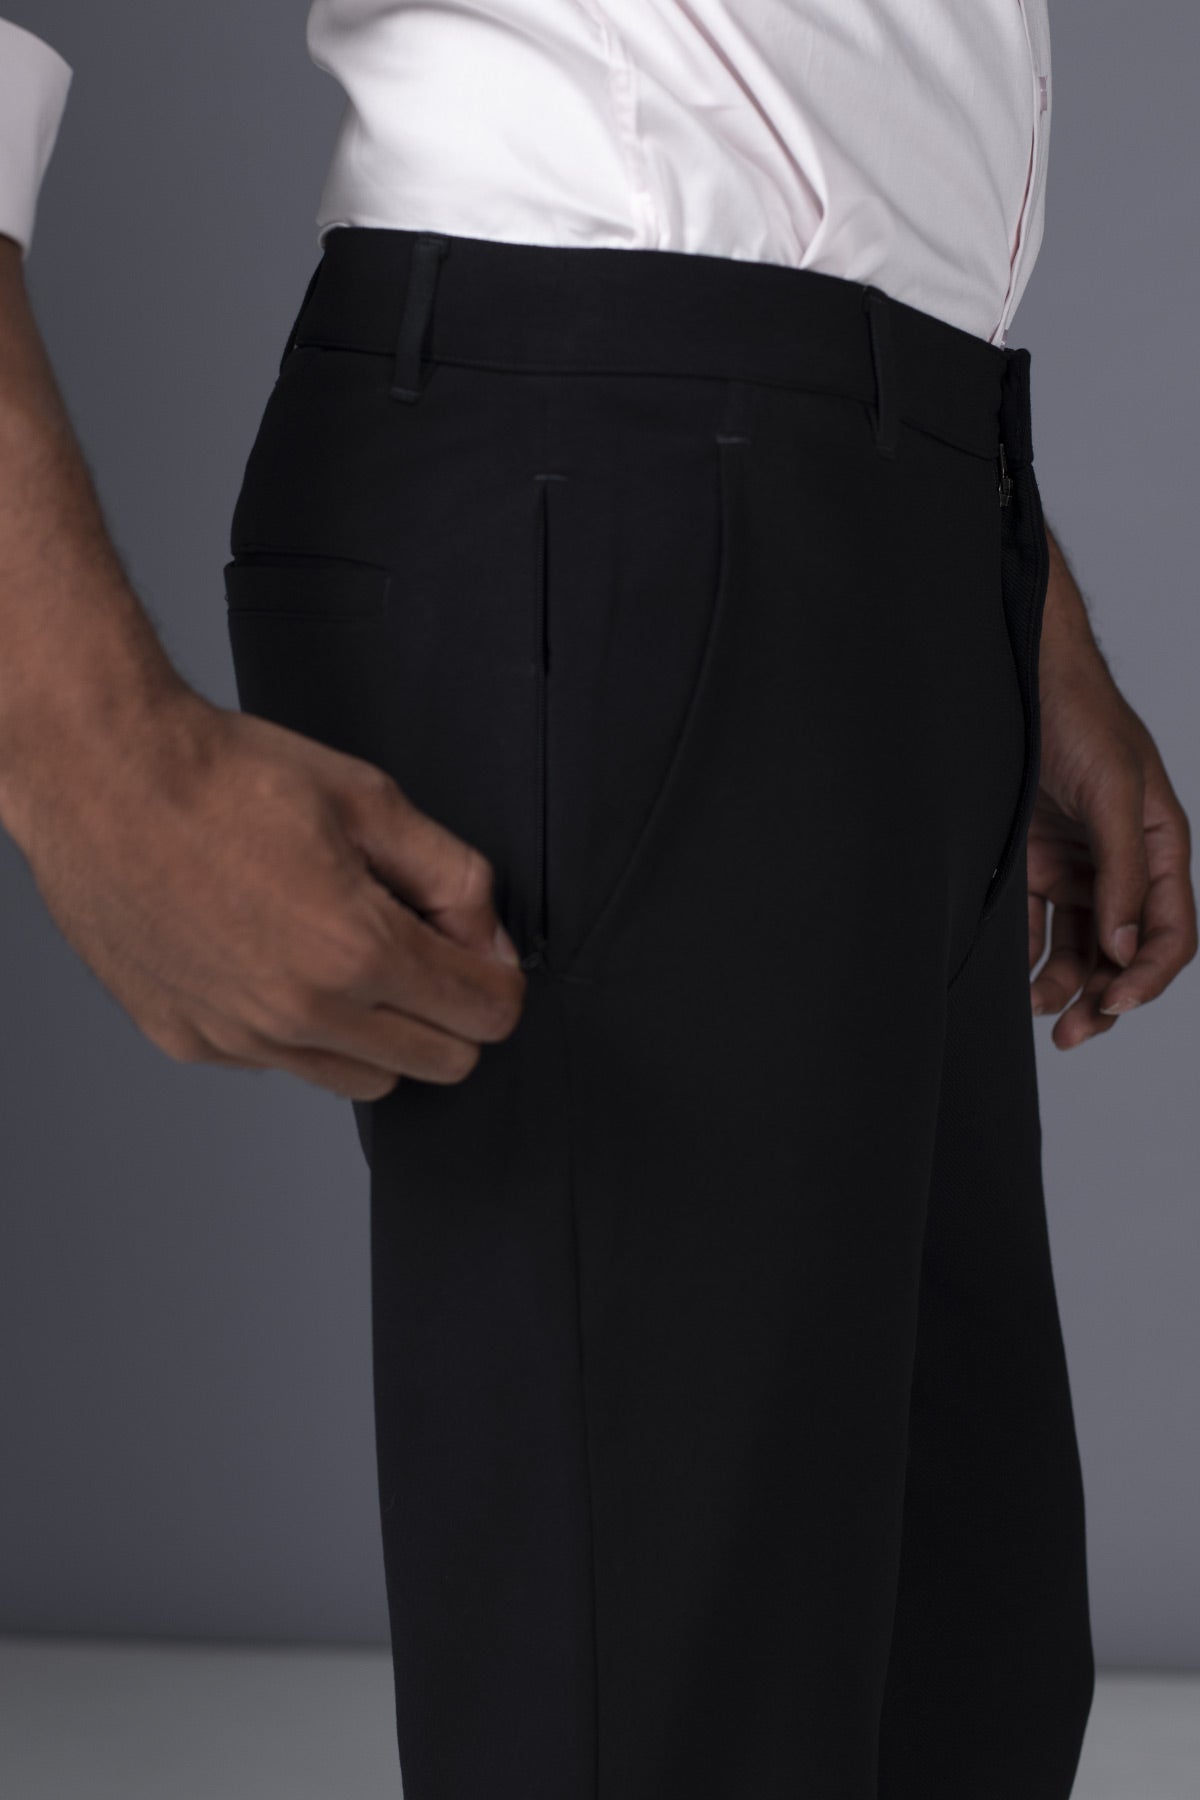 Buy Black Trousers  Pants for Men by NETWORK Online  Ajiocom